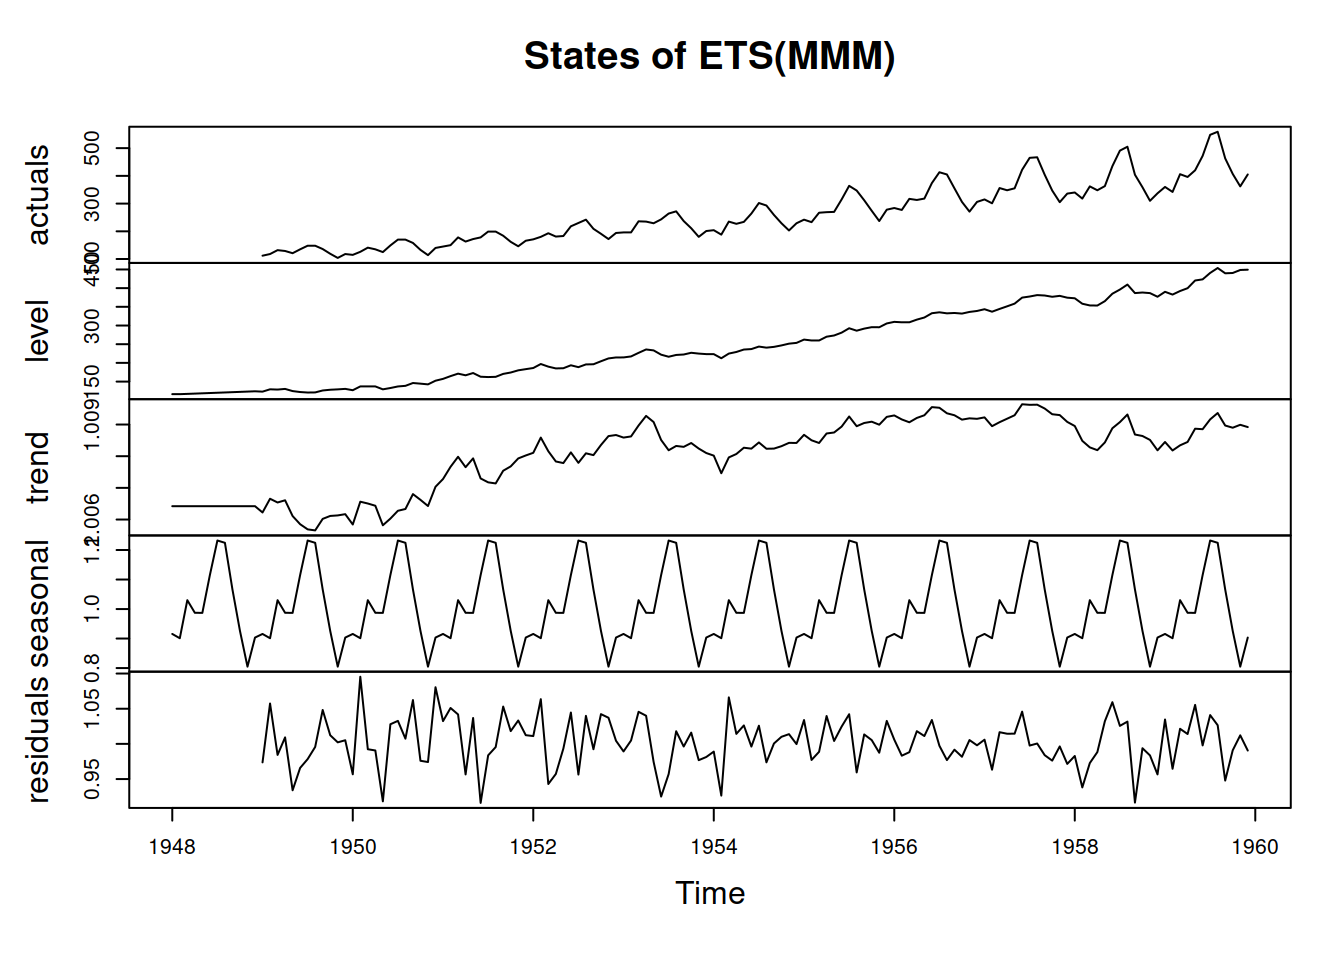 Decomposition of air passengers data using an ETS(M,M,M) model.